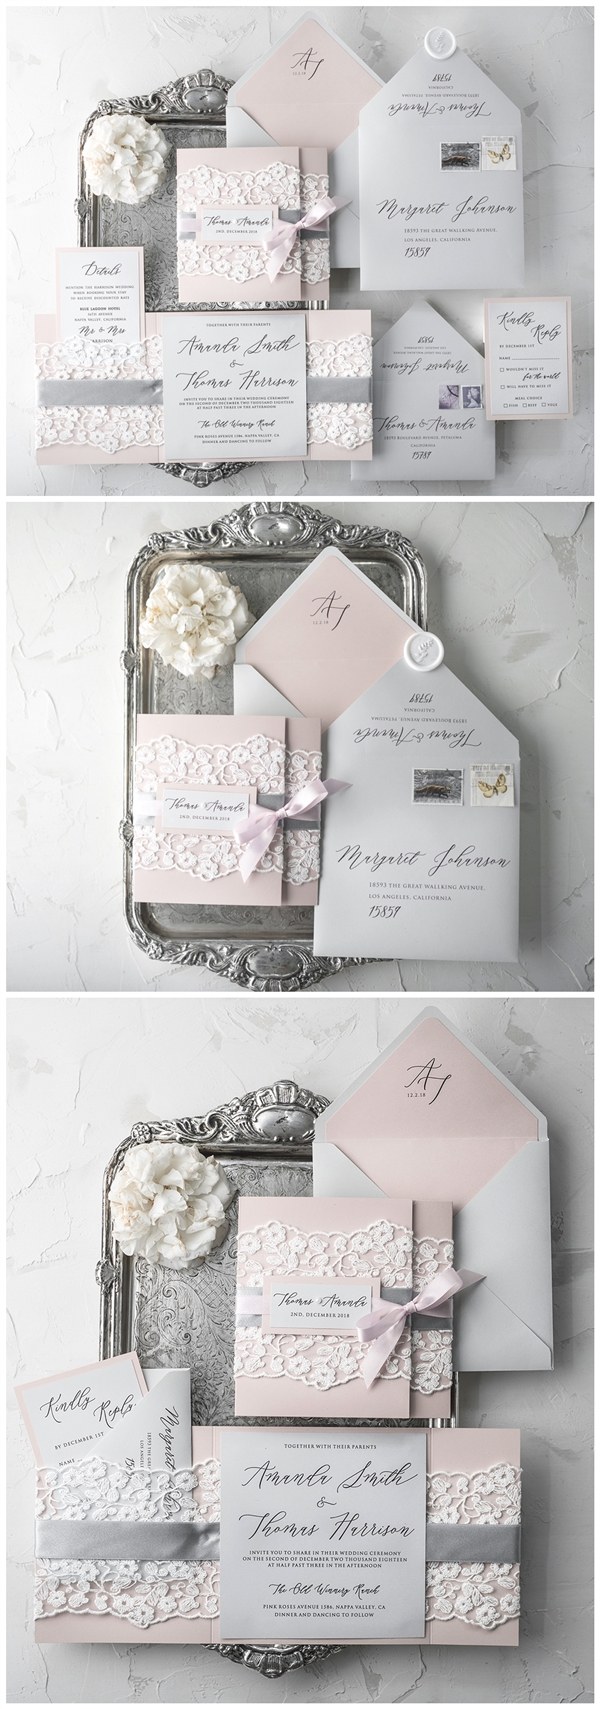 Grey and pink vinatge lace wedding invitations